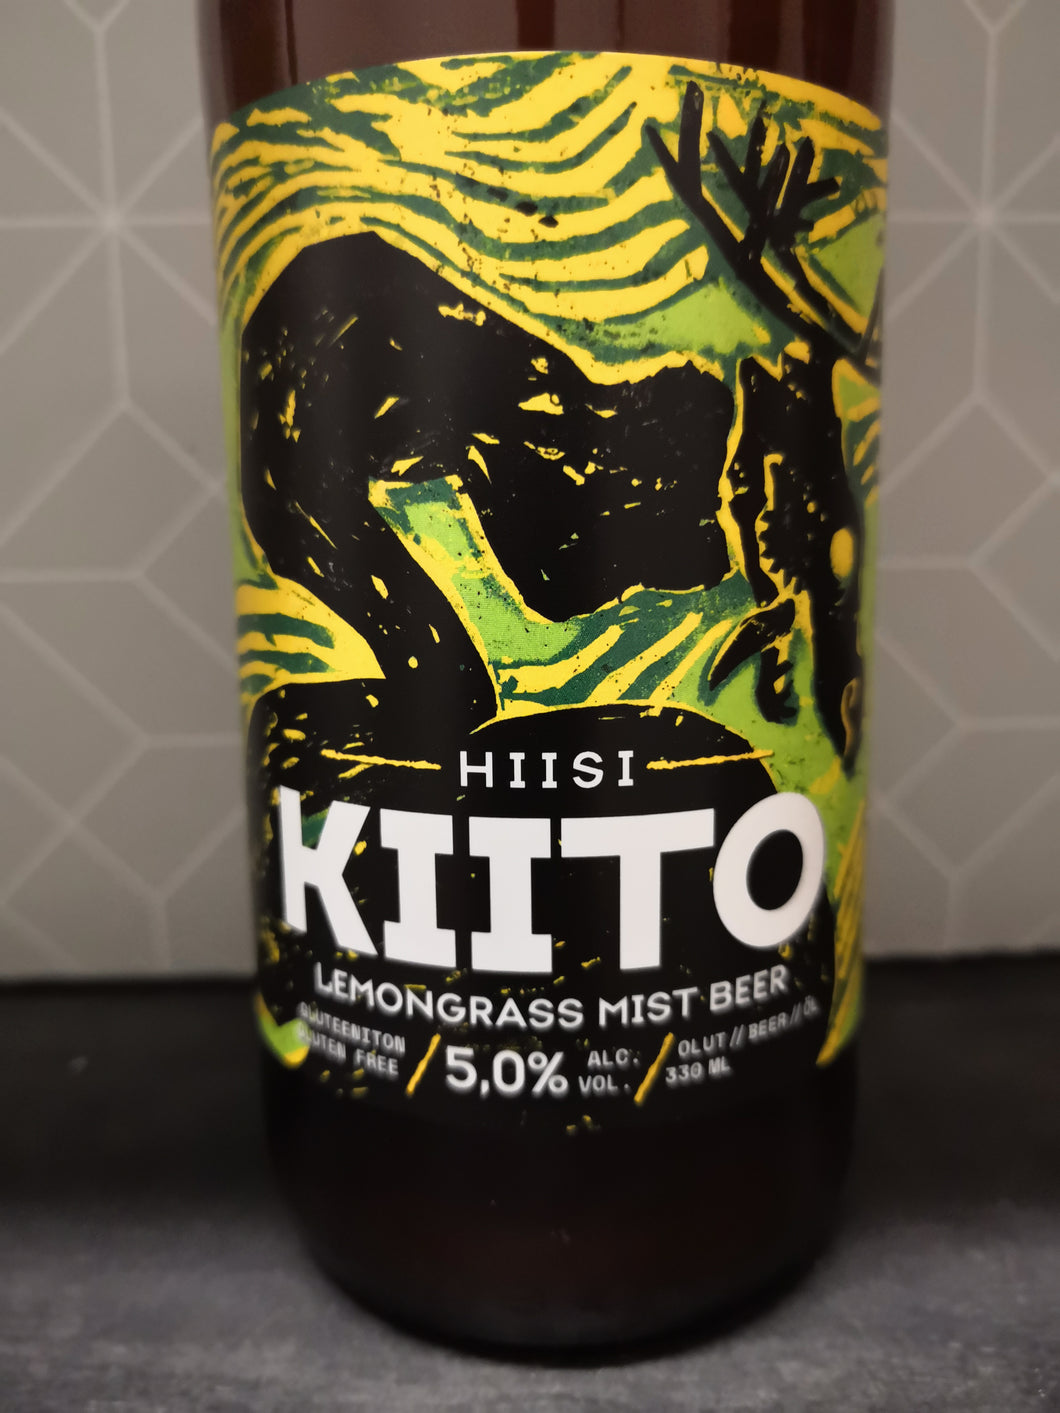 Hiisi Kiito Lemongrass Mist Beer